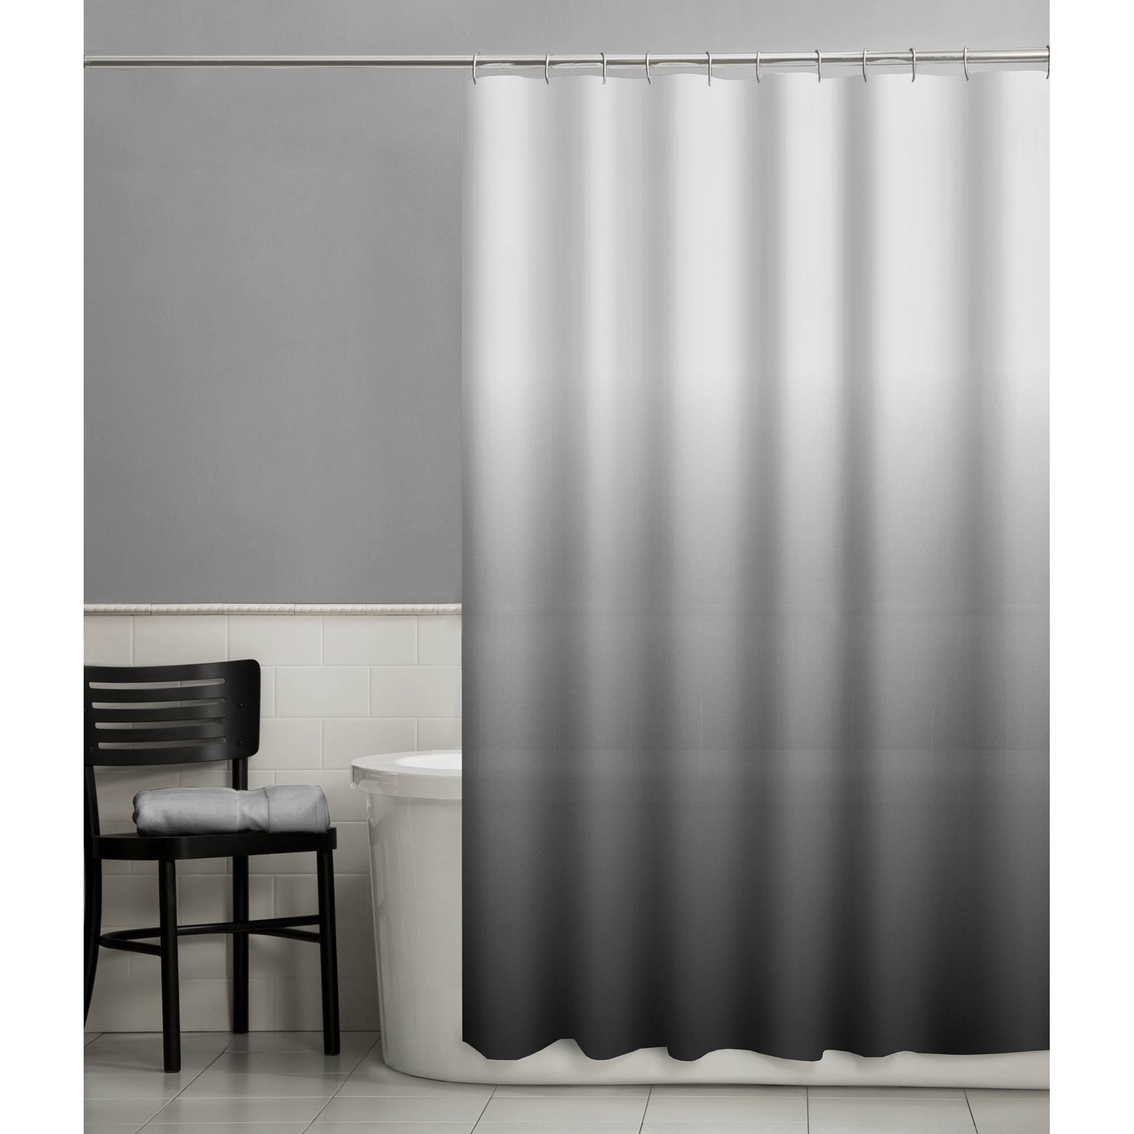 Maytex Happy PEVA Shower Curtain, Black - Image 3 of 3